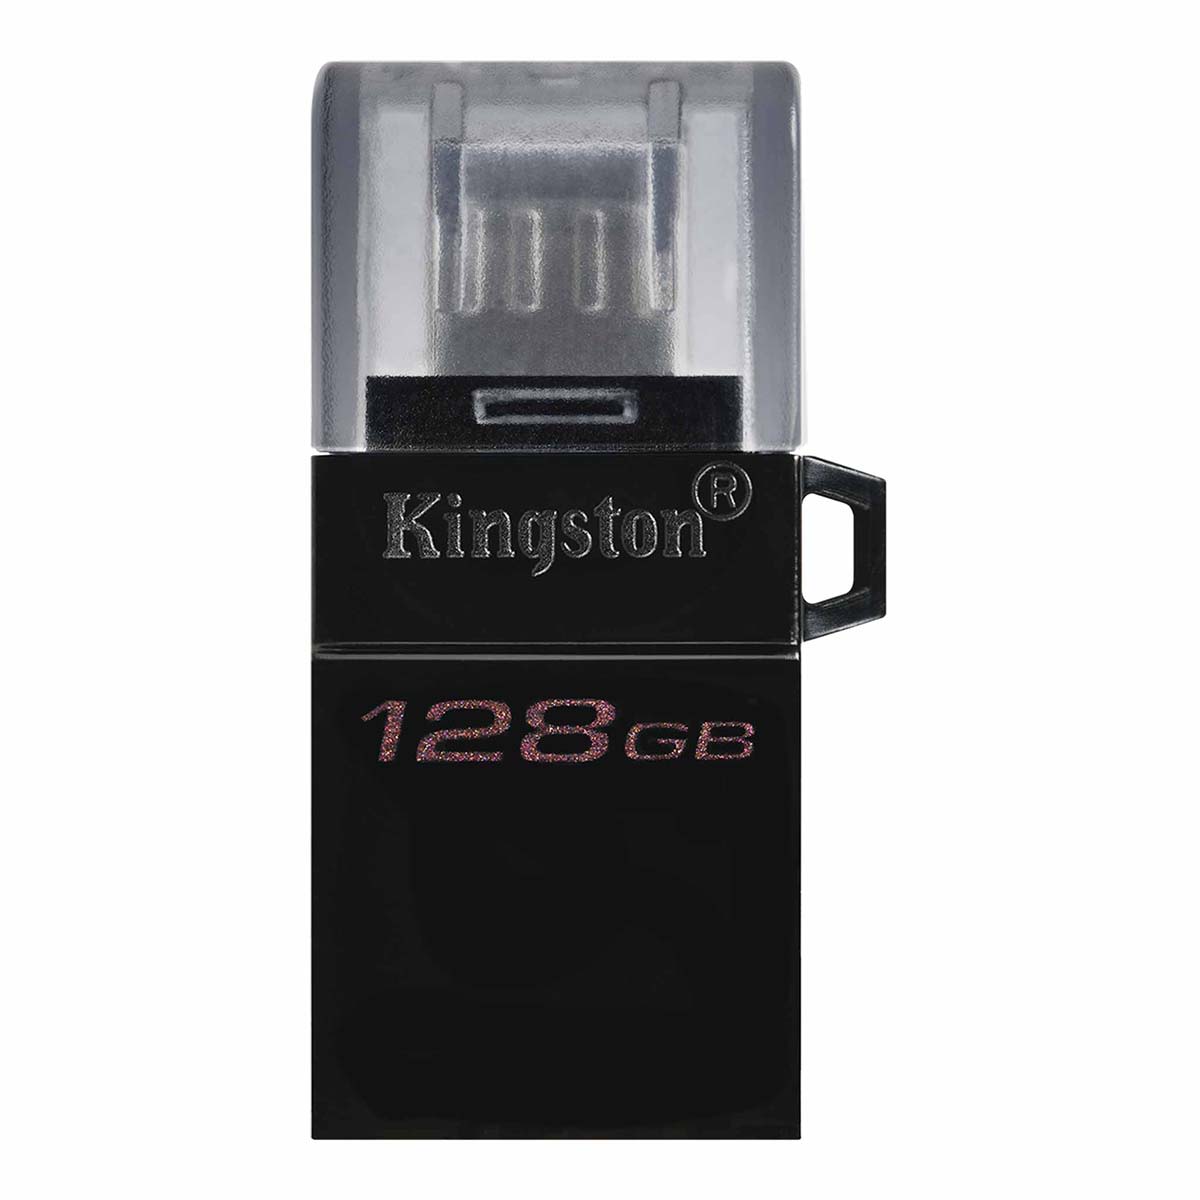 Kingston microDuo3 G2 128 GB Micro SD Card